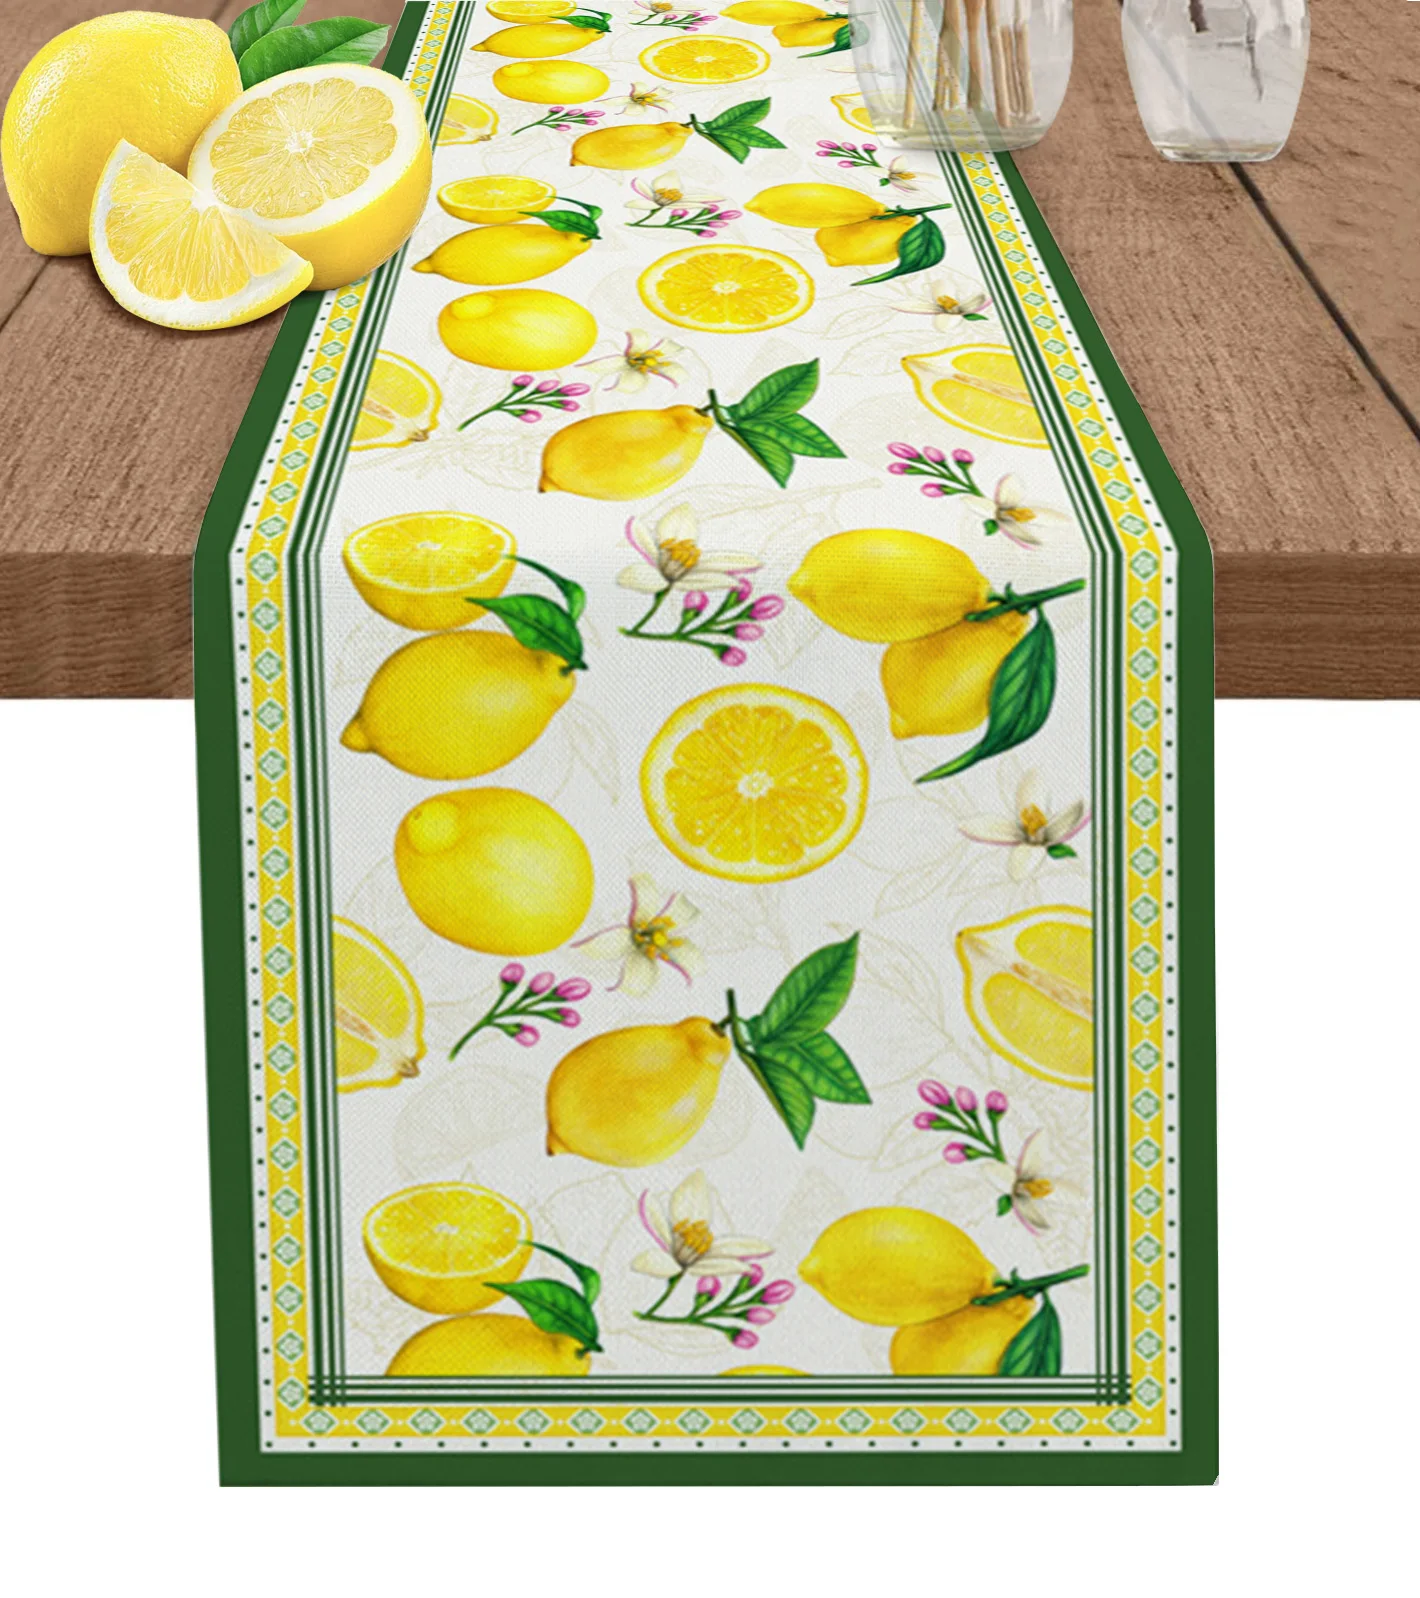 

Summer Idyllic Fruit Lemon Green Table Runner luxury Kitchen Dinner Table Cover Wedding Party Decor Cotton Linen Tablecloth